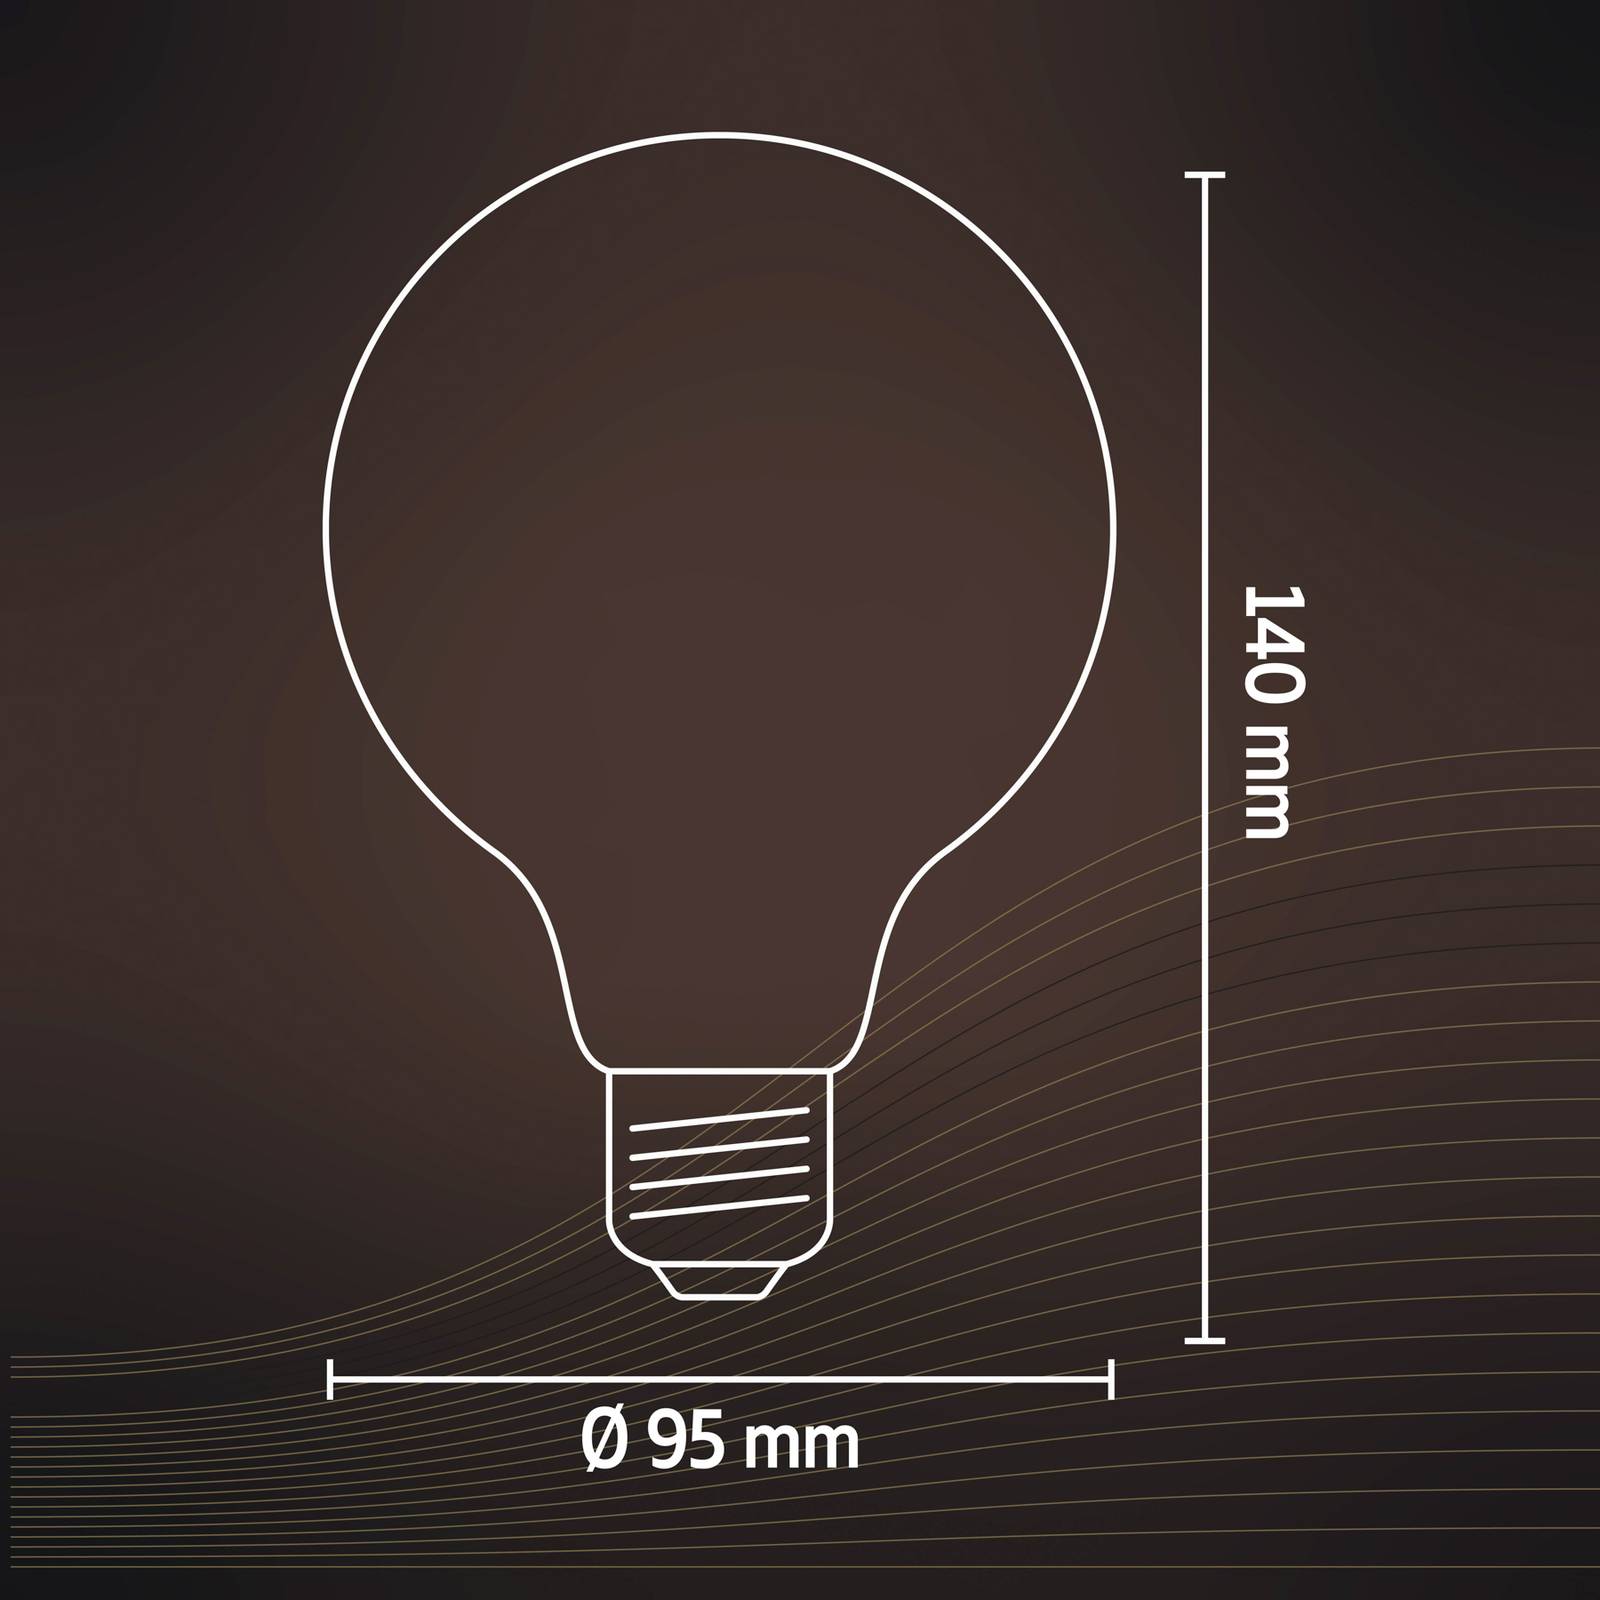 Calex E27 G95 3,8W LED filament flex 821 zlatá